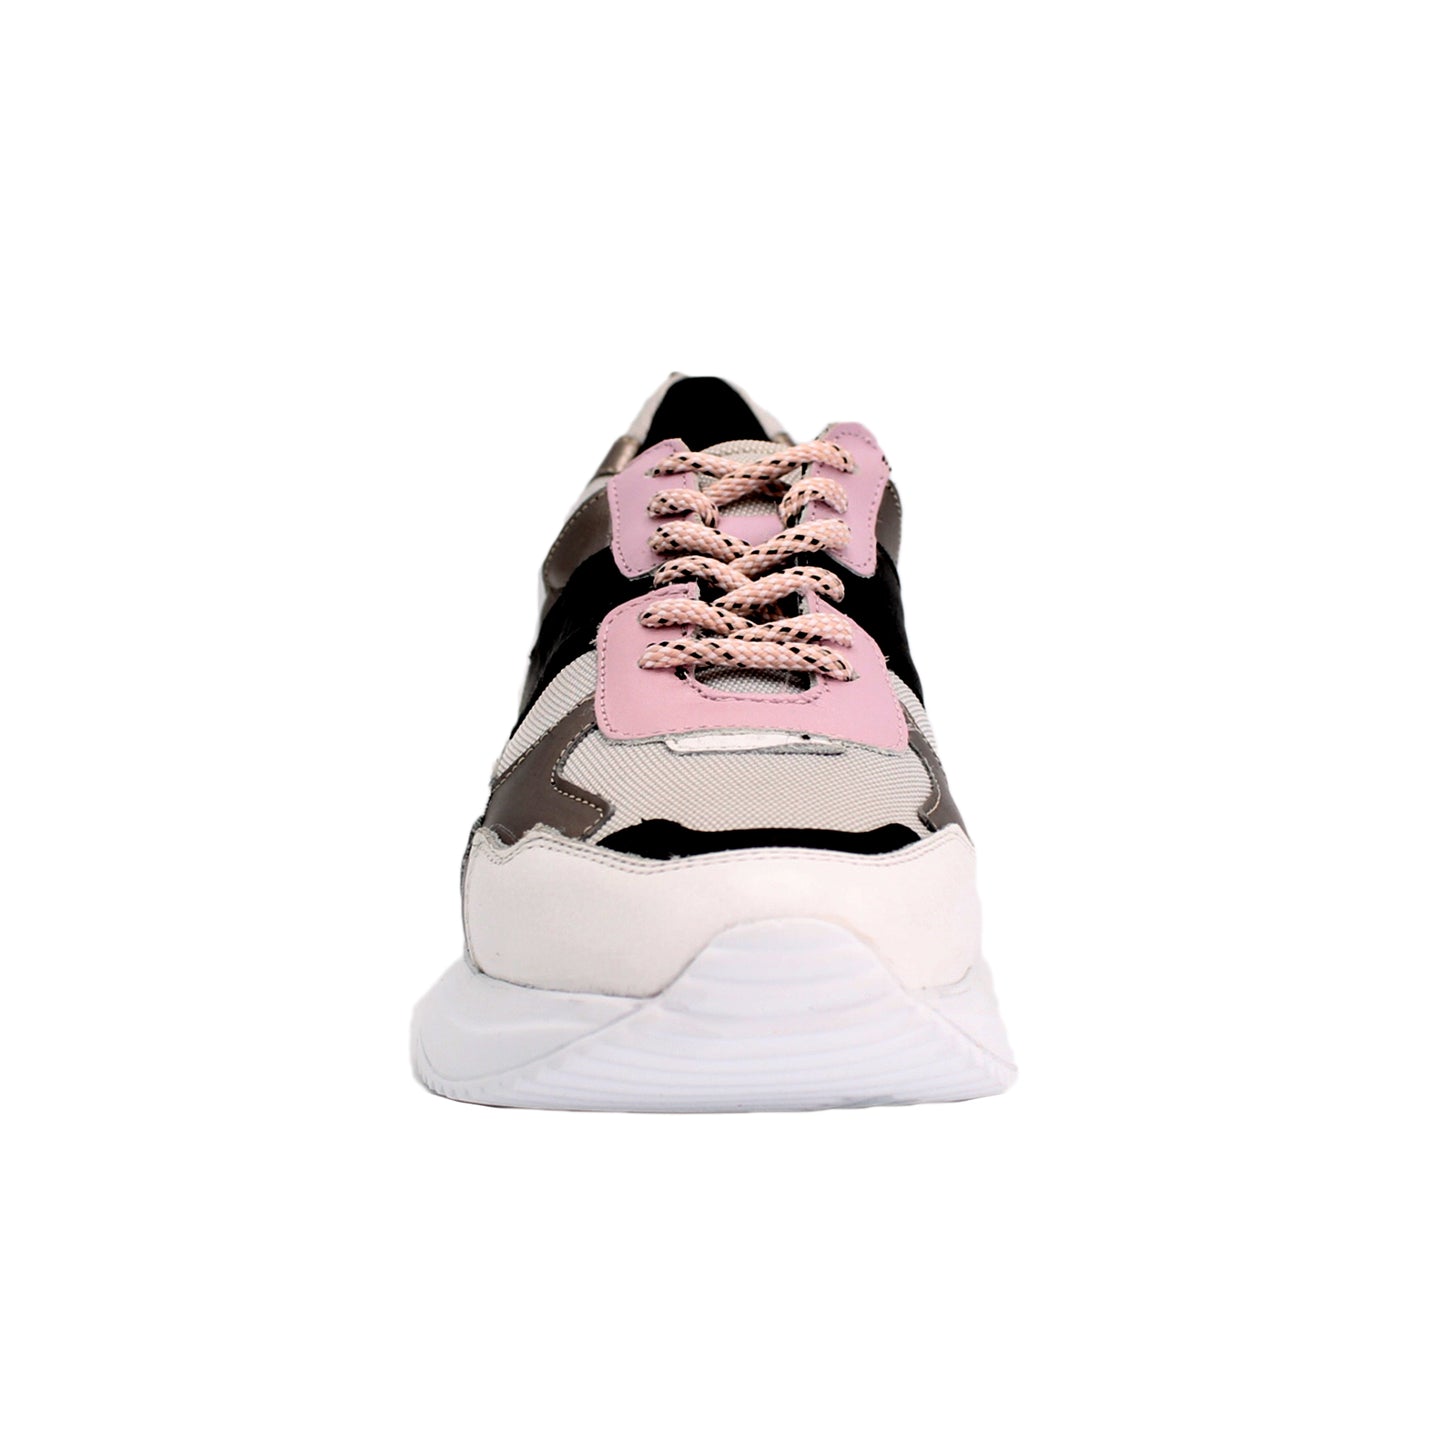 Tenis para dama color blanco con rosa | Alexa Modelo 4306